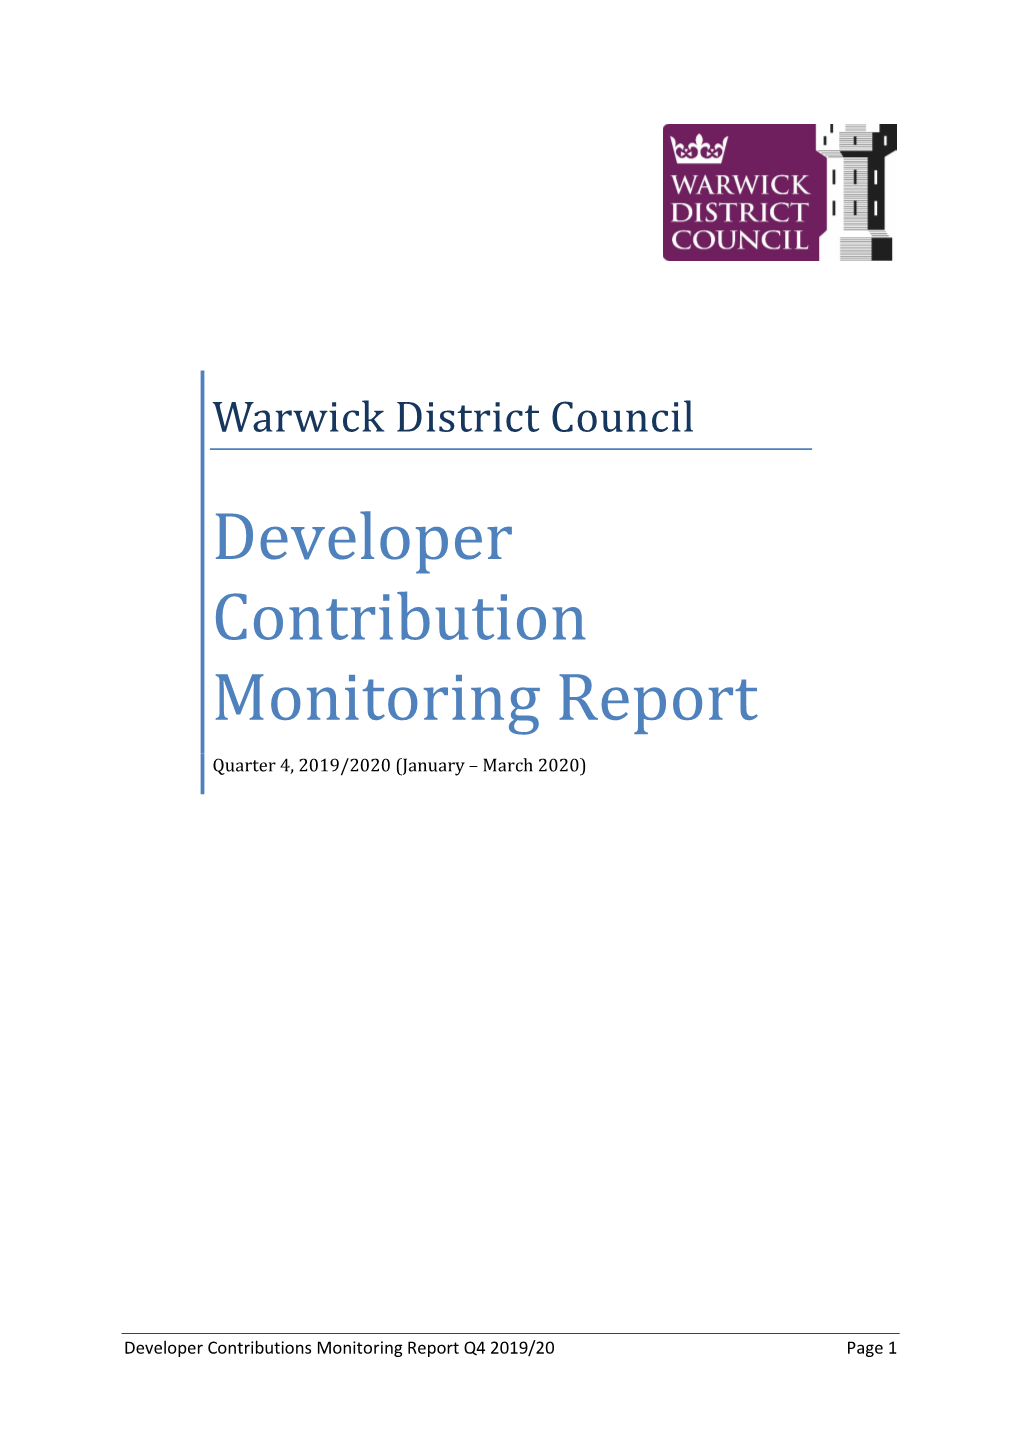 2019-20 Q4 Developer Contribution Monitoring Report